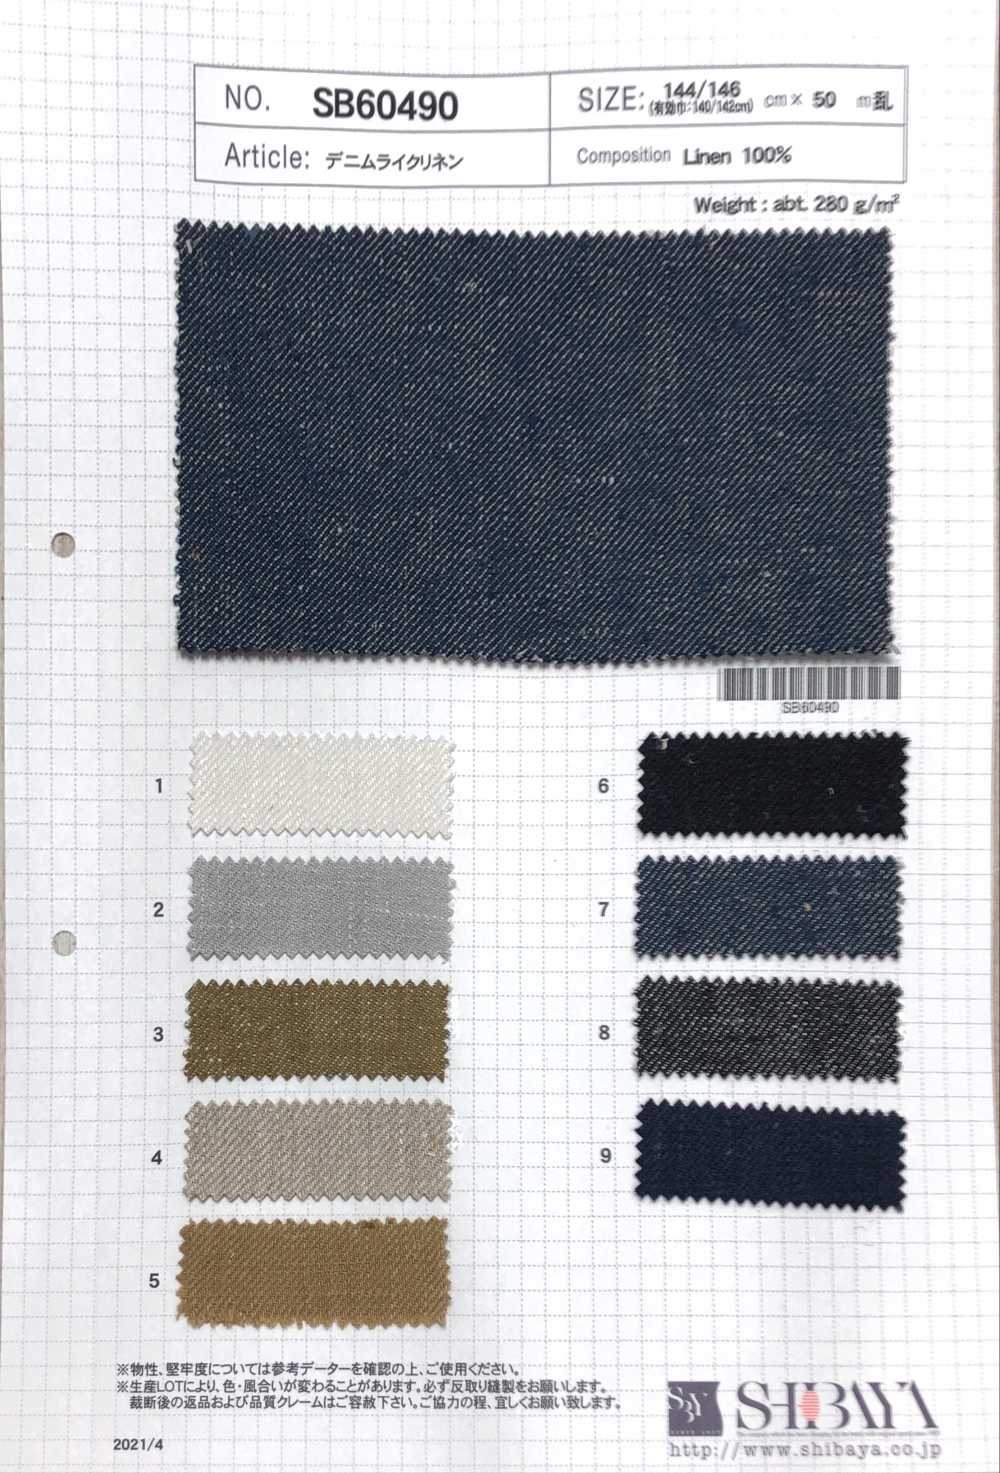 SB60490 Denim-Leinen[Textilgewebe] SHIBAYA